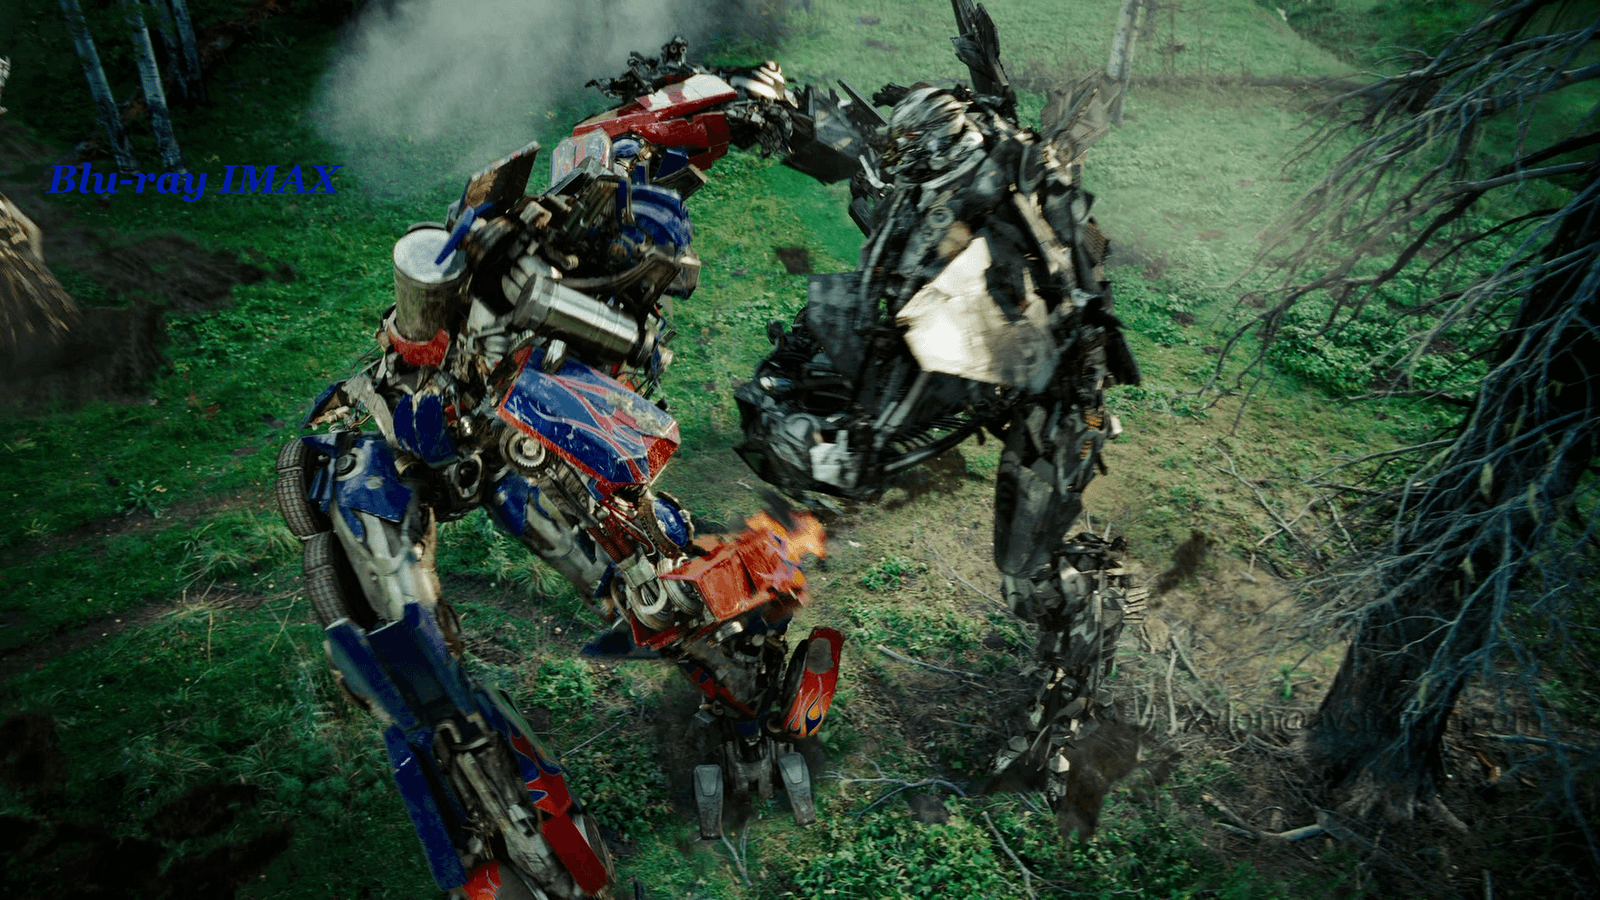 Transformer pict: Transformers 2 Optimus Prime vs Megatron